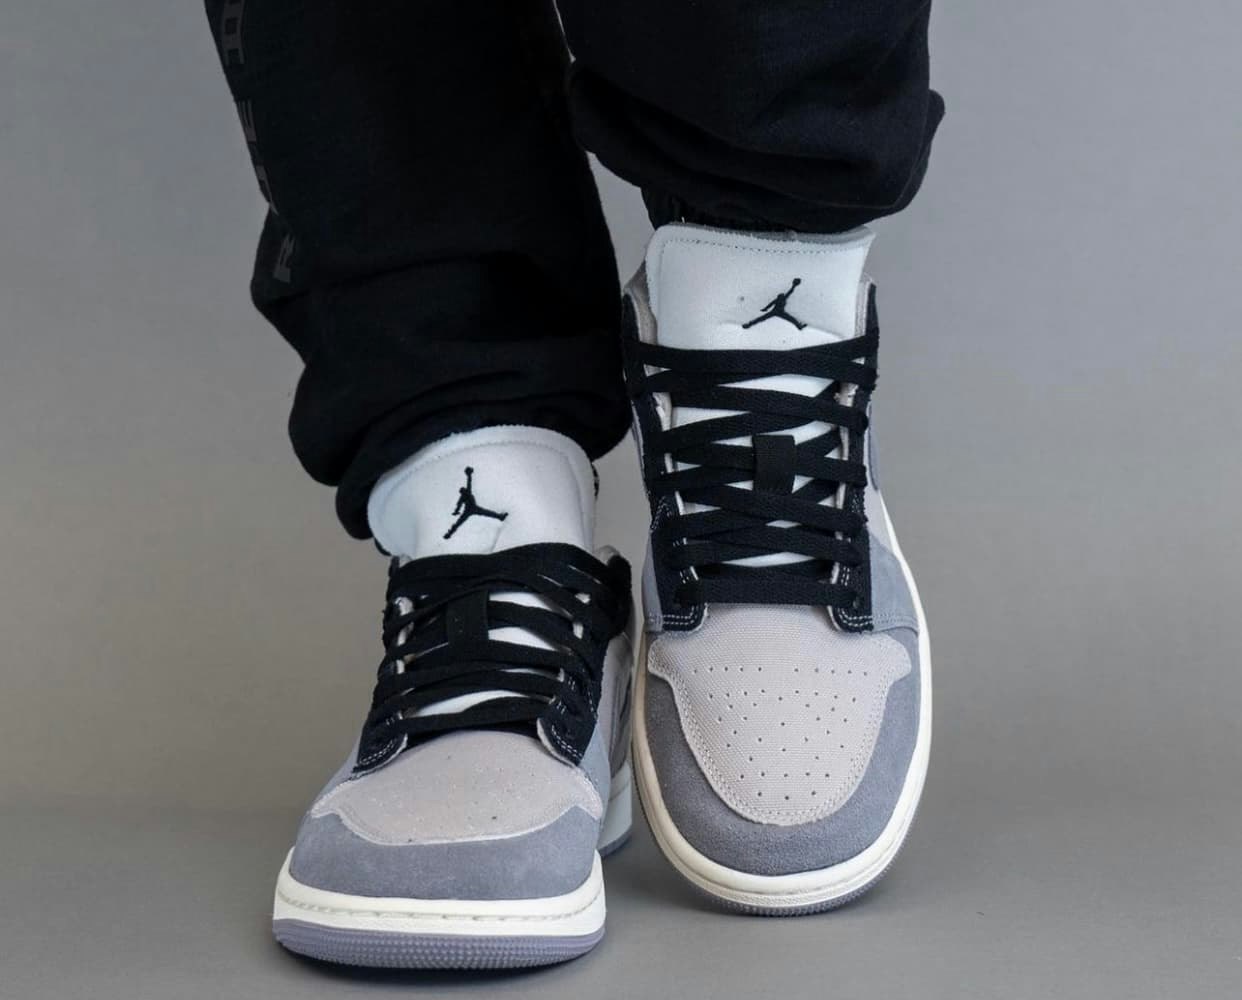 Air Jordan 1 Low Craft “Cement Grey”